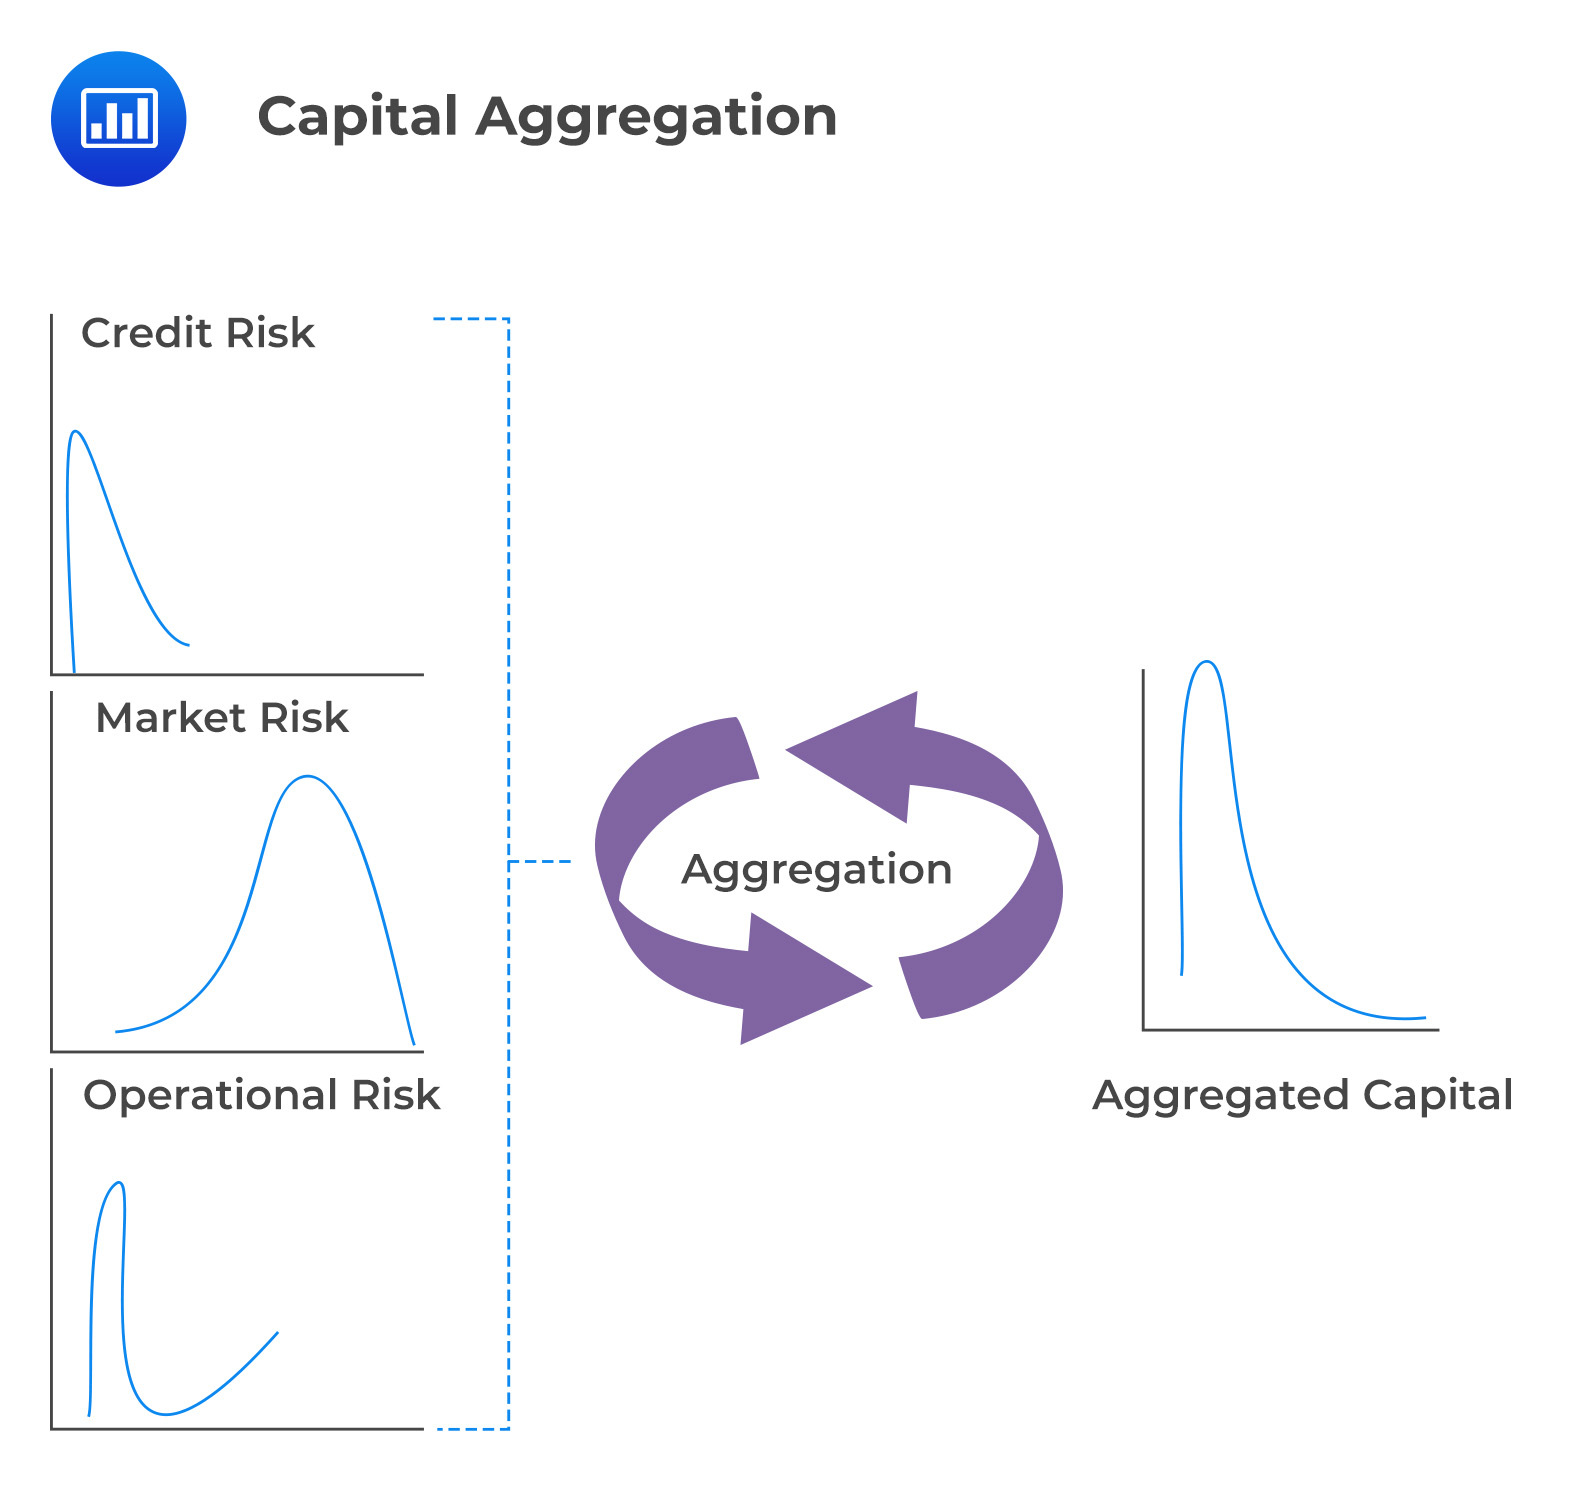 Capital aggregation